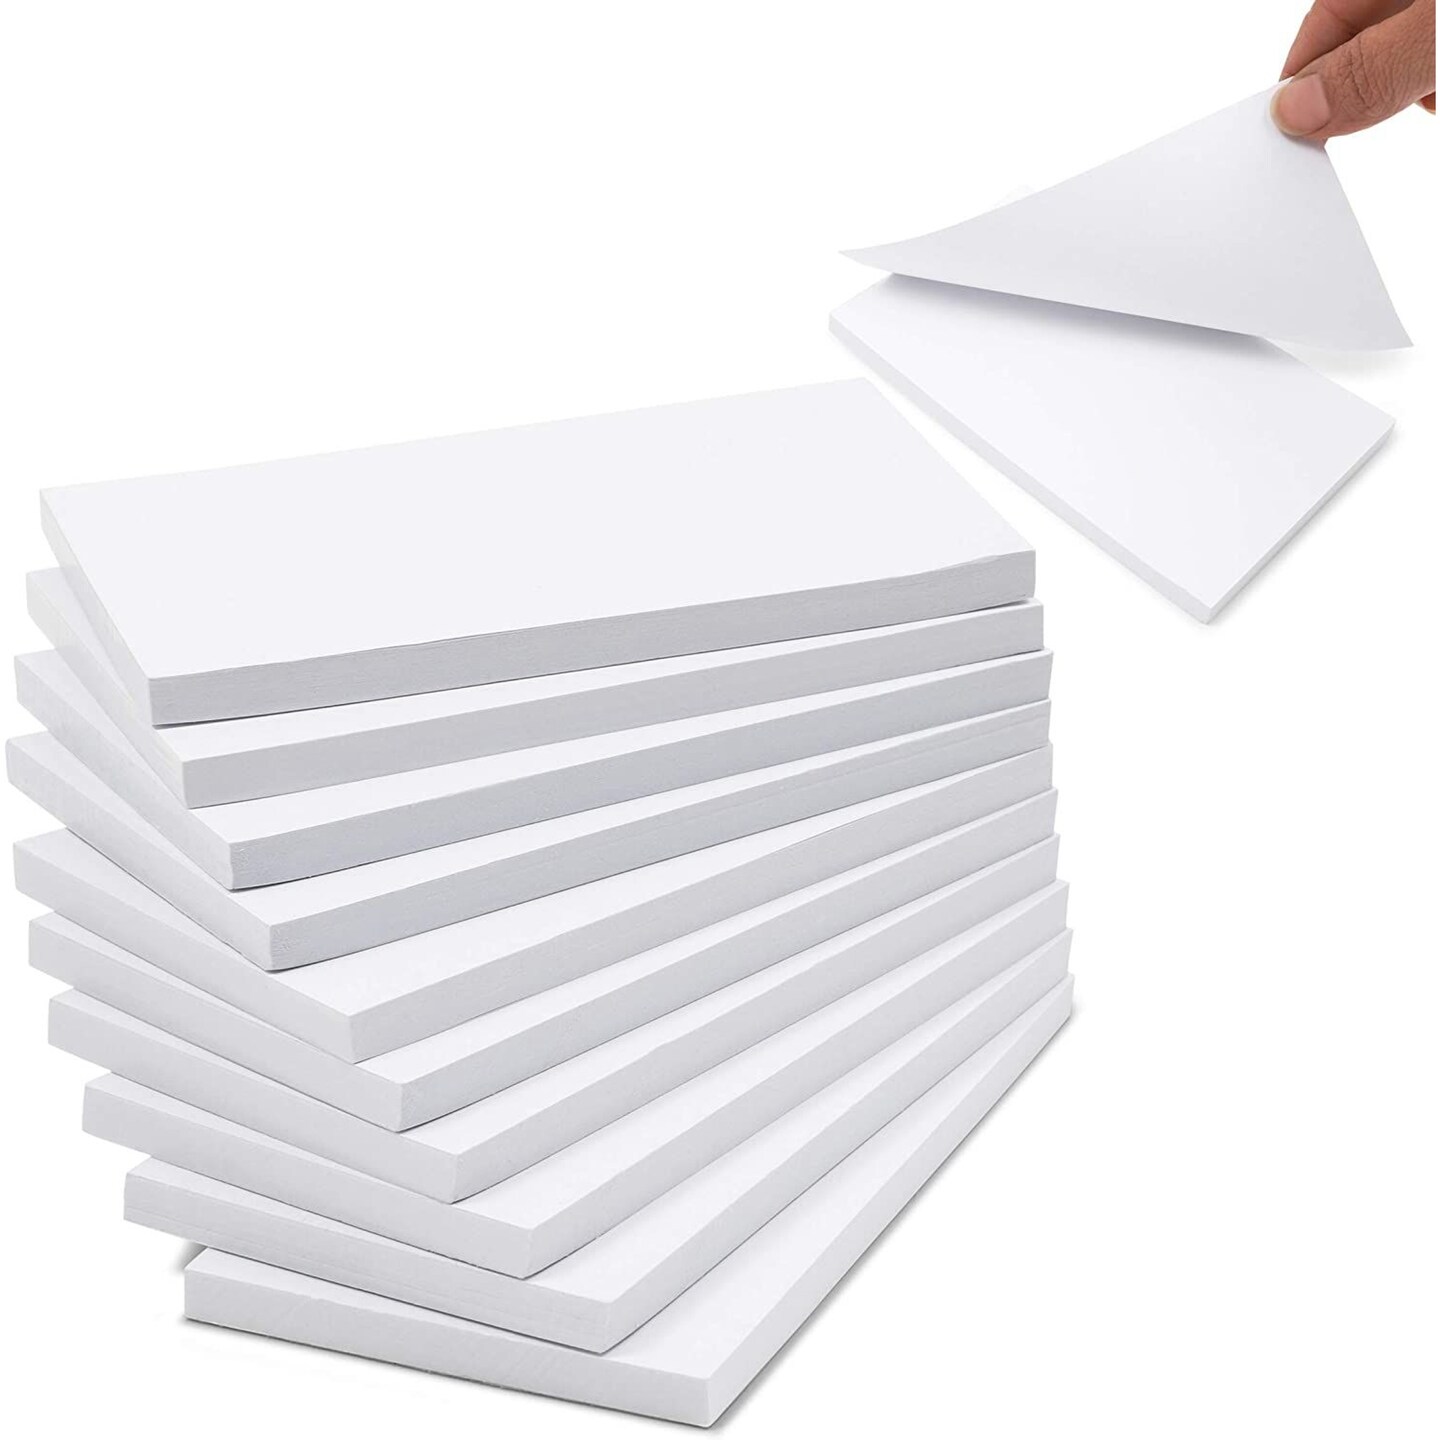 3 x 5 Bulk White Blank Notepads/Scratch Pads/Memo Pad -200 Pads